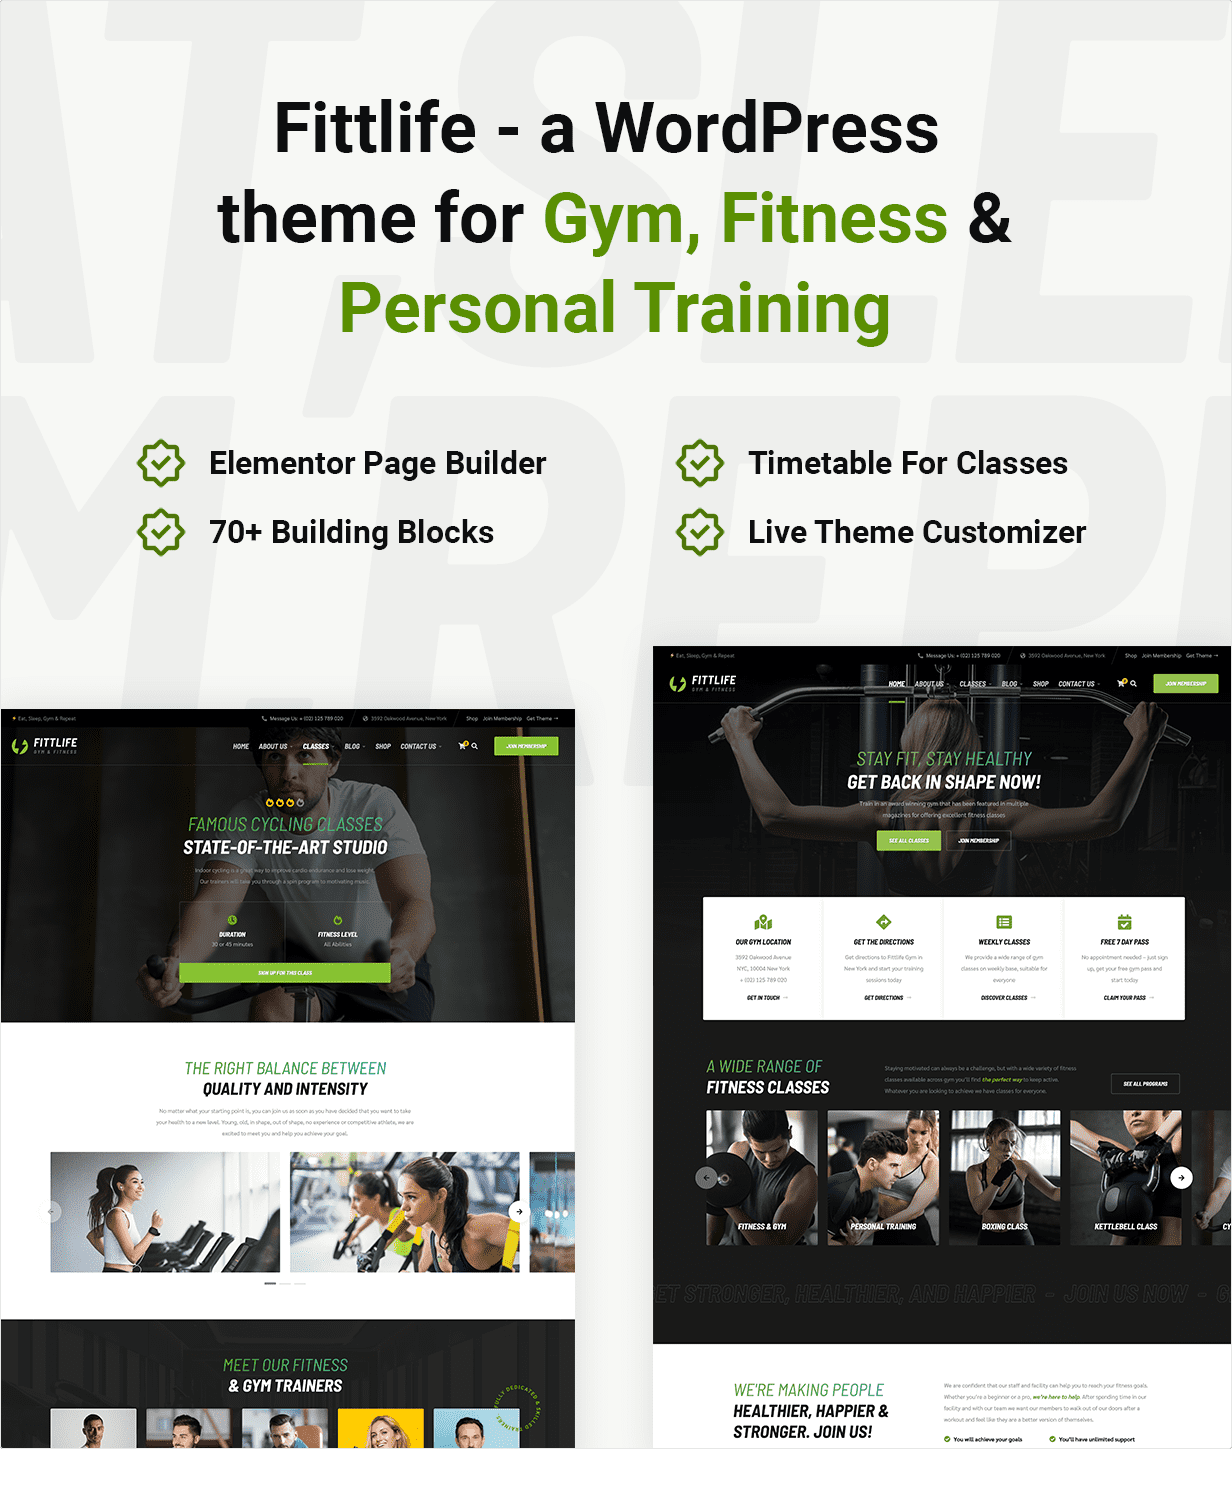 Fittlife - Gym & Fitness WordPress Theme